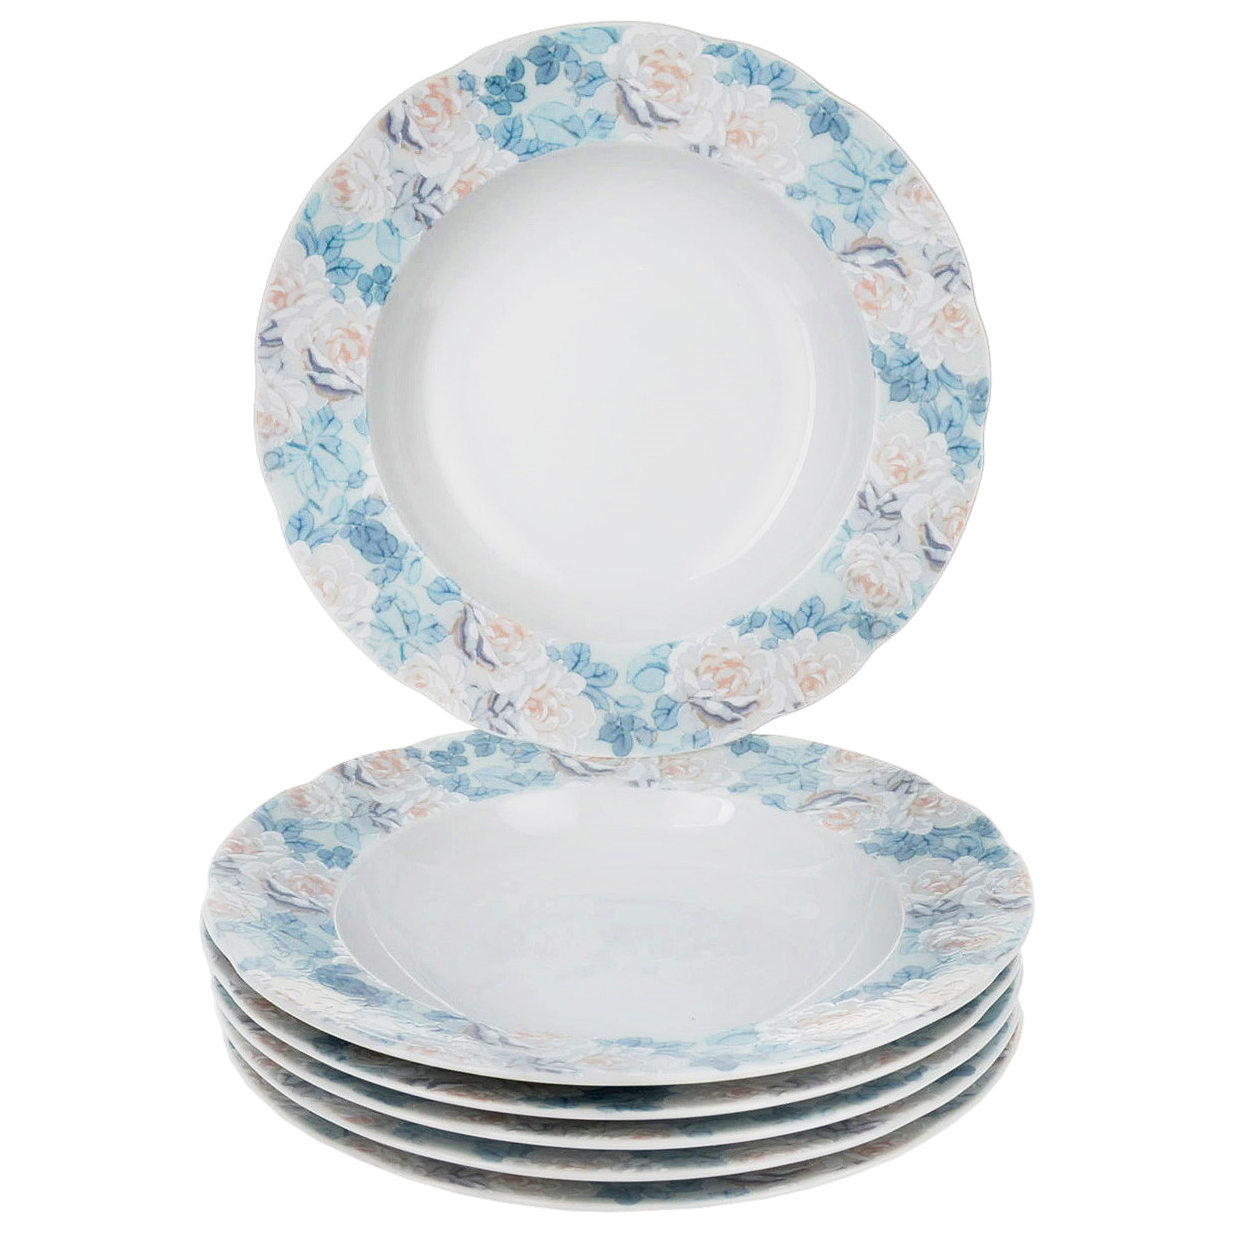 Набор глубоких тарелок Thun Голубая роза 23 см 6 шт набор тарелок глубоких 23 см 6 шт сабина платиновая отводка